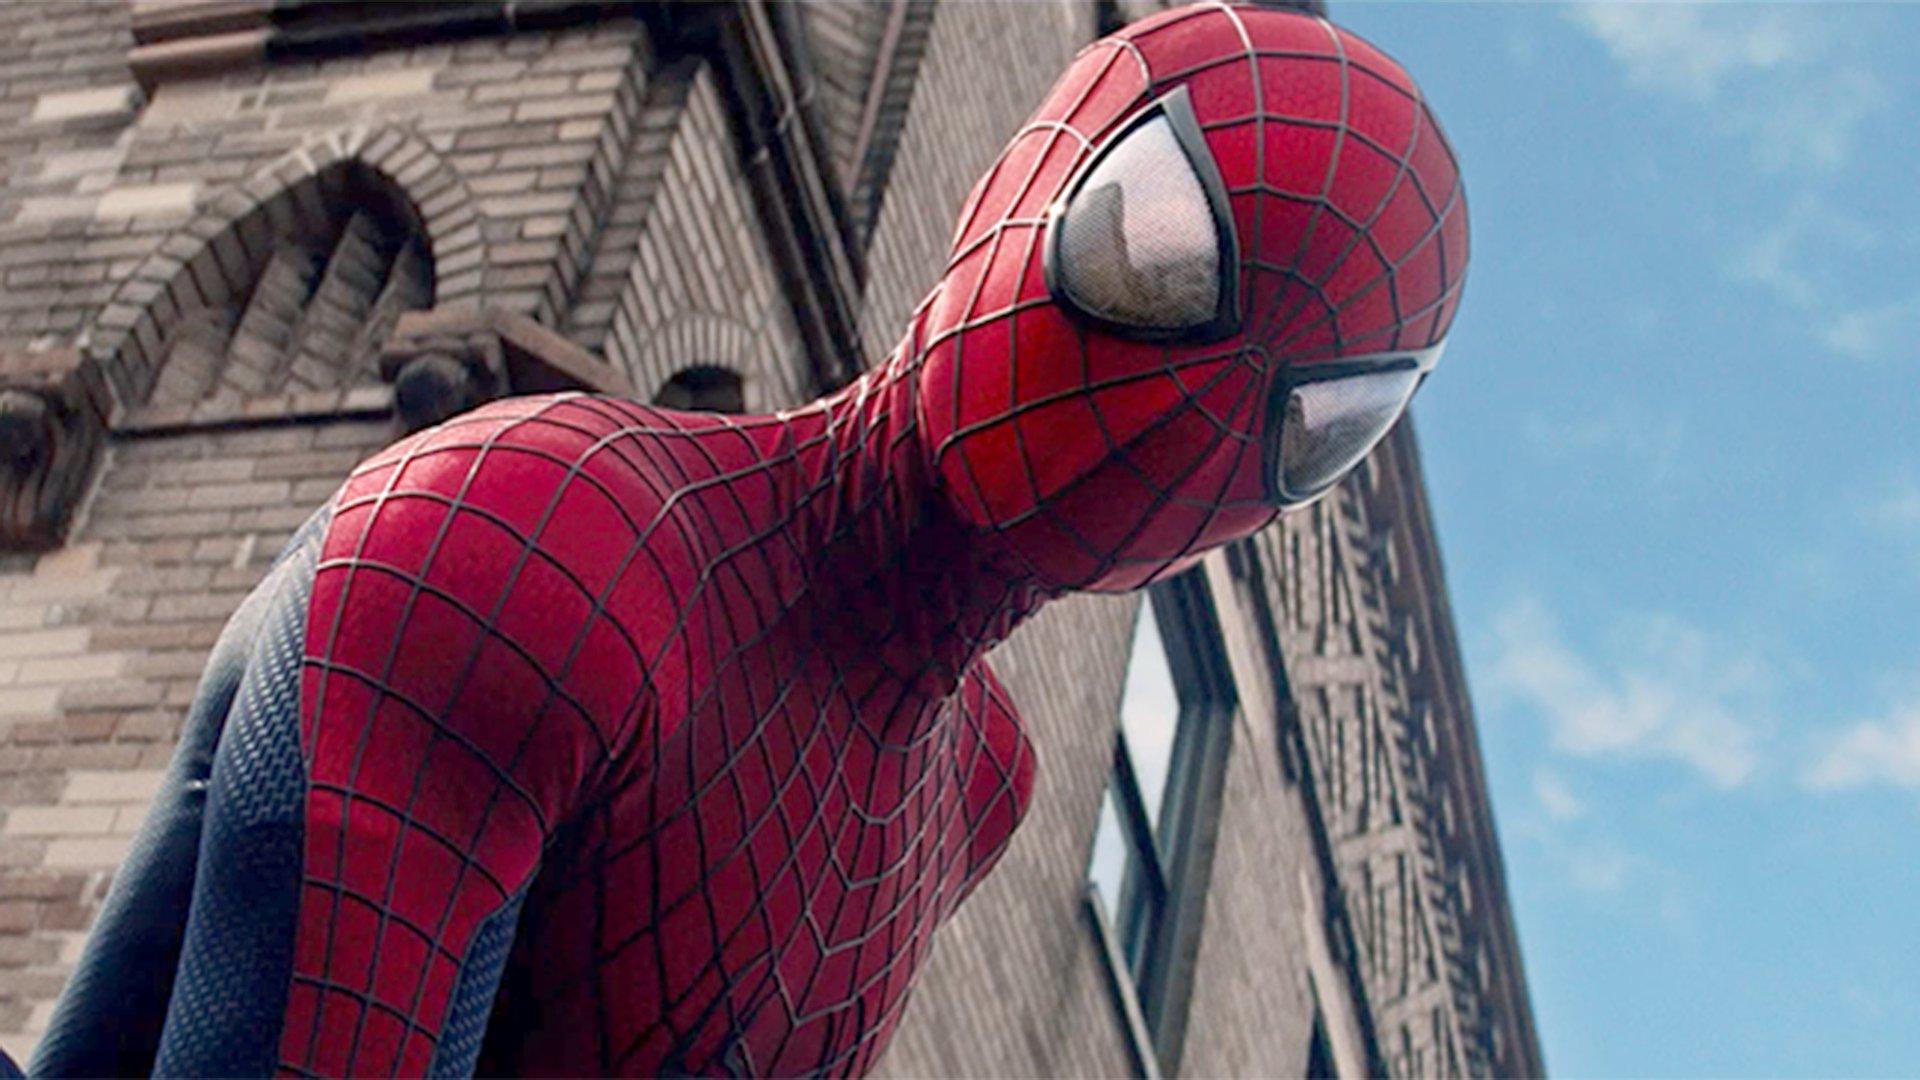 AMAZING SPIDER-MAN 2 Action Adventure Fantasy Comics Movie Spider Spiderman Marvel Superhero looking for you Wallpaper